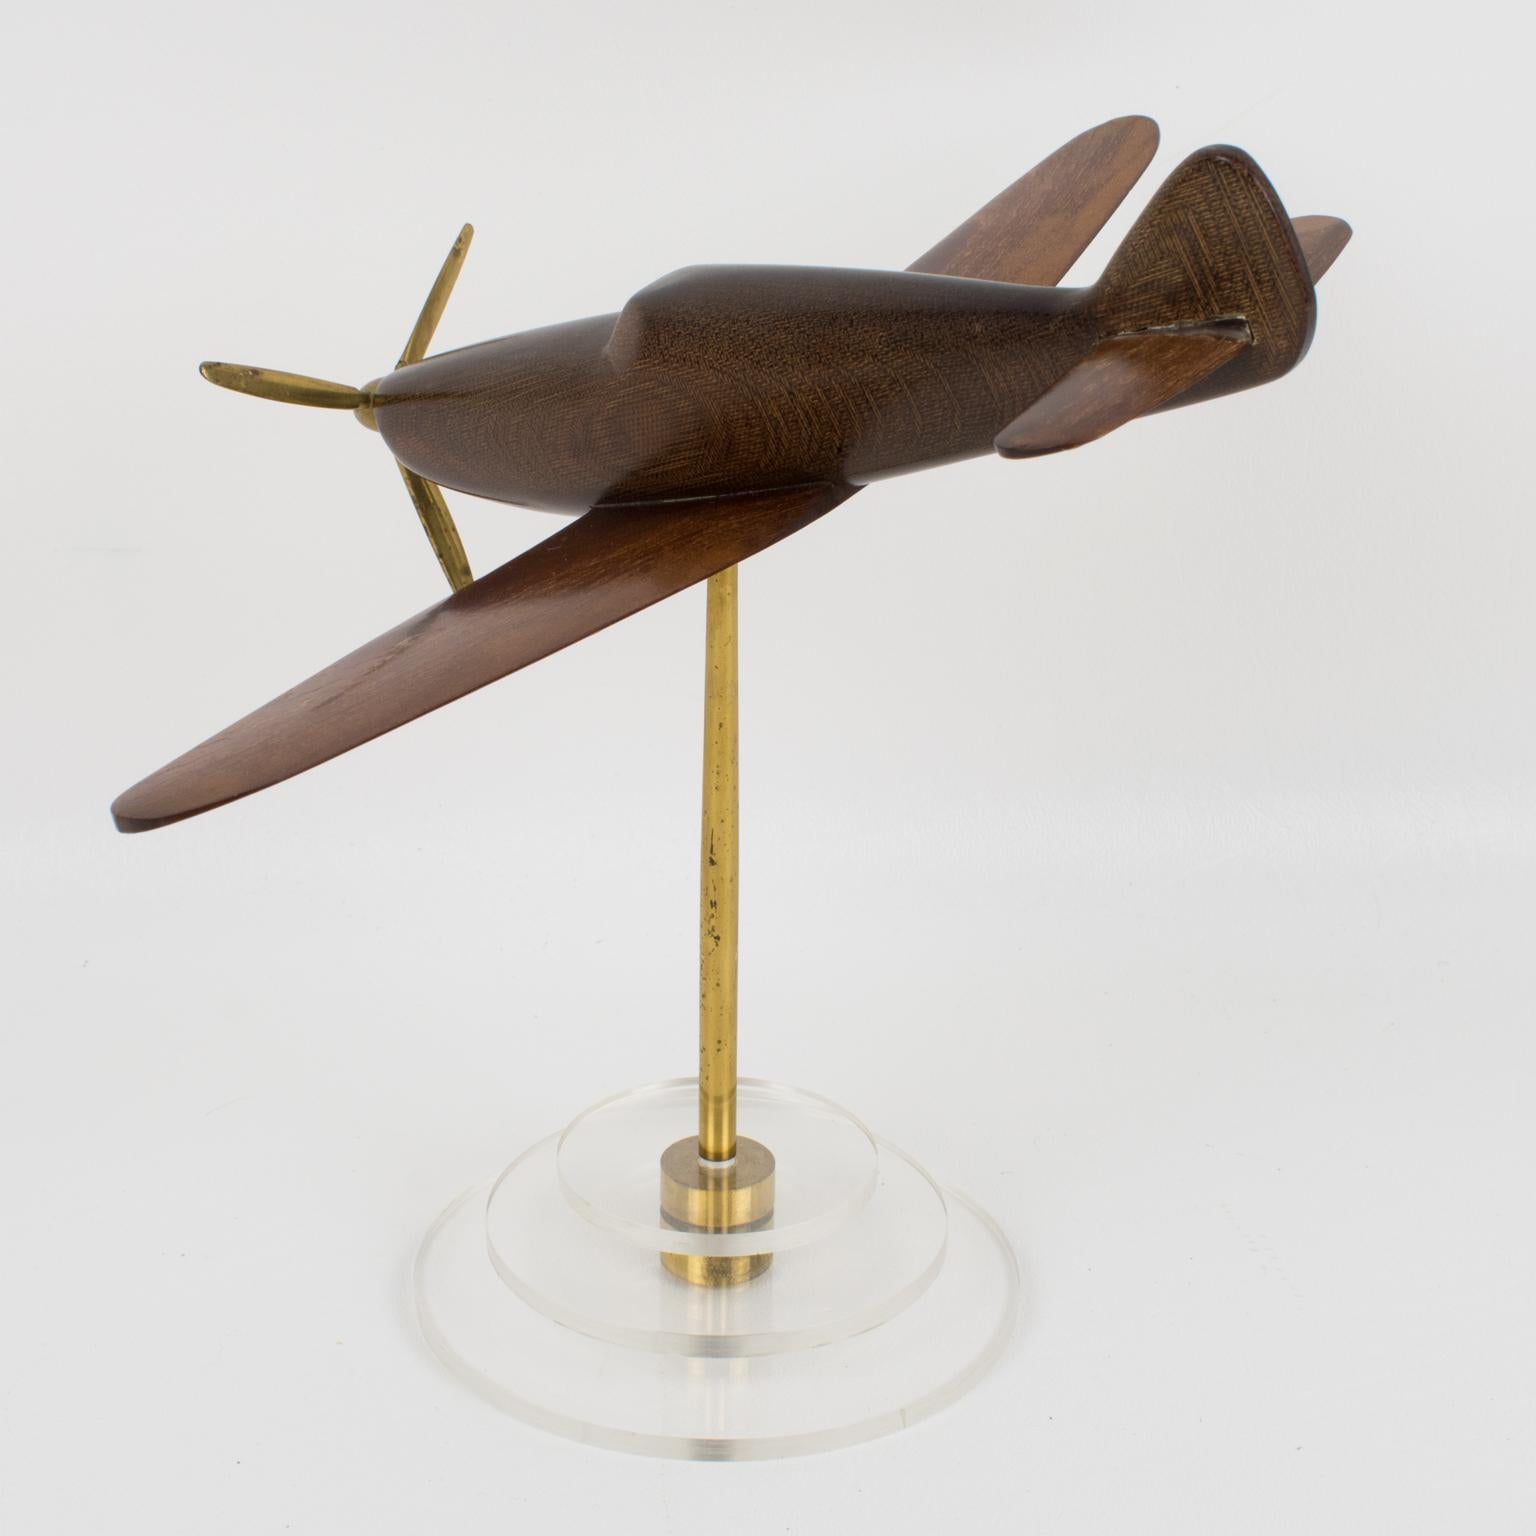 wooden spitfire propeller